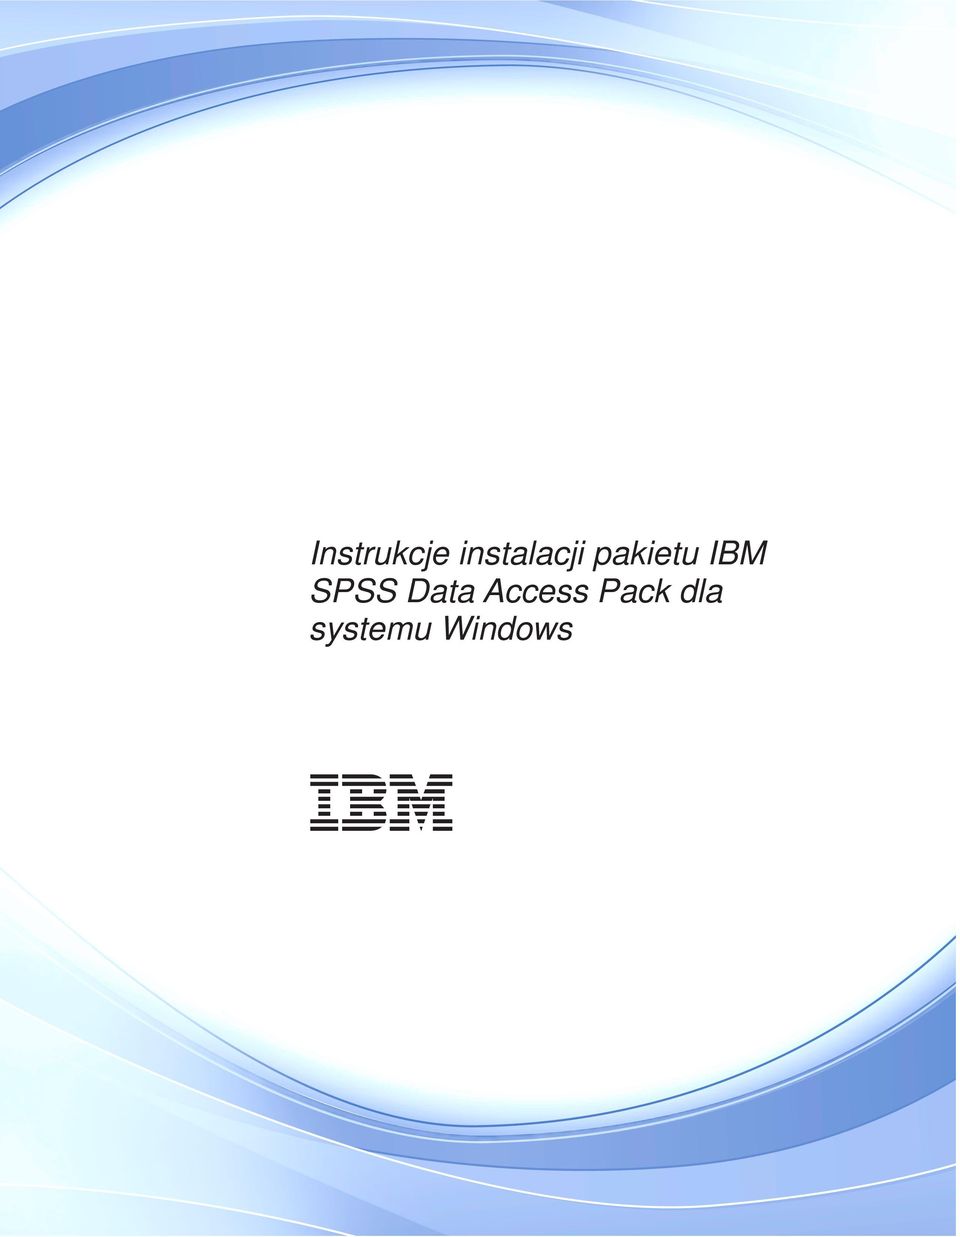 IBM SPSS Data